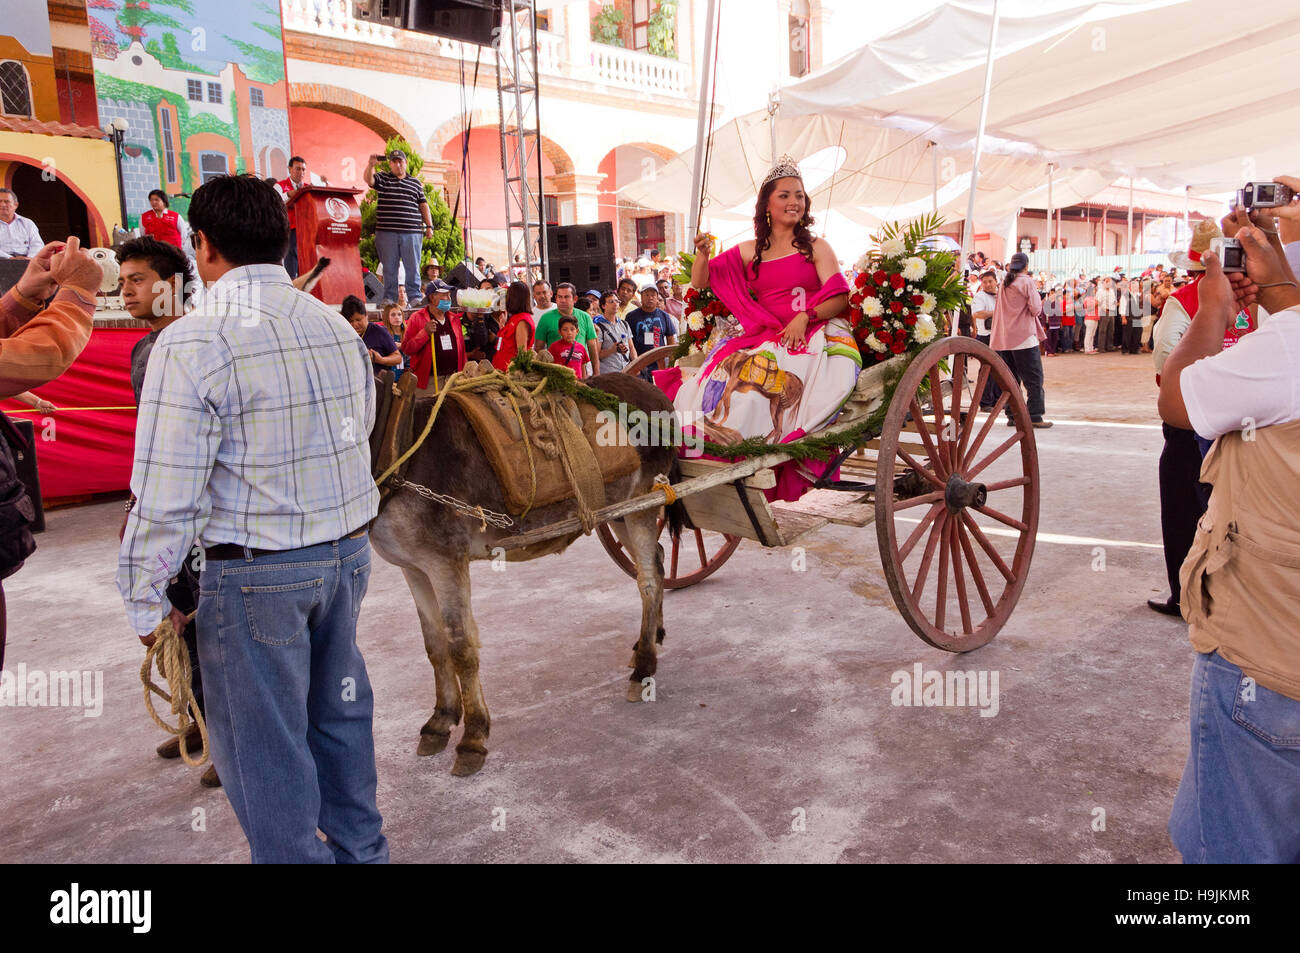 Queen of the Donkey fair in Otumba, Mexico Stock Photo